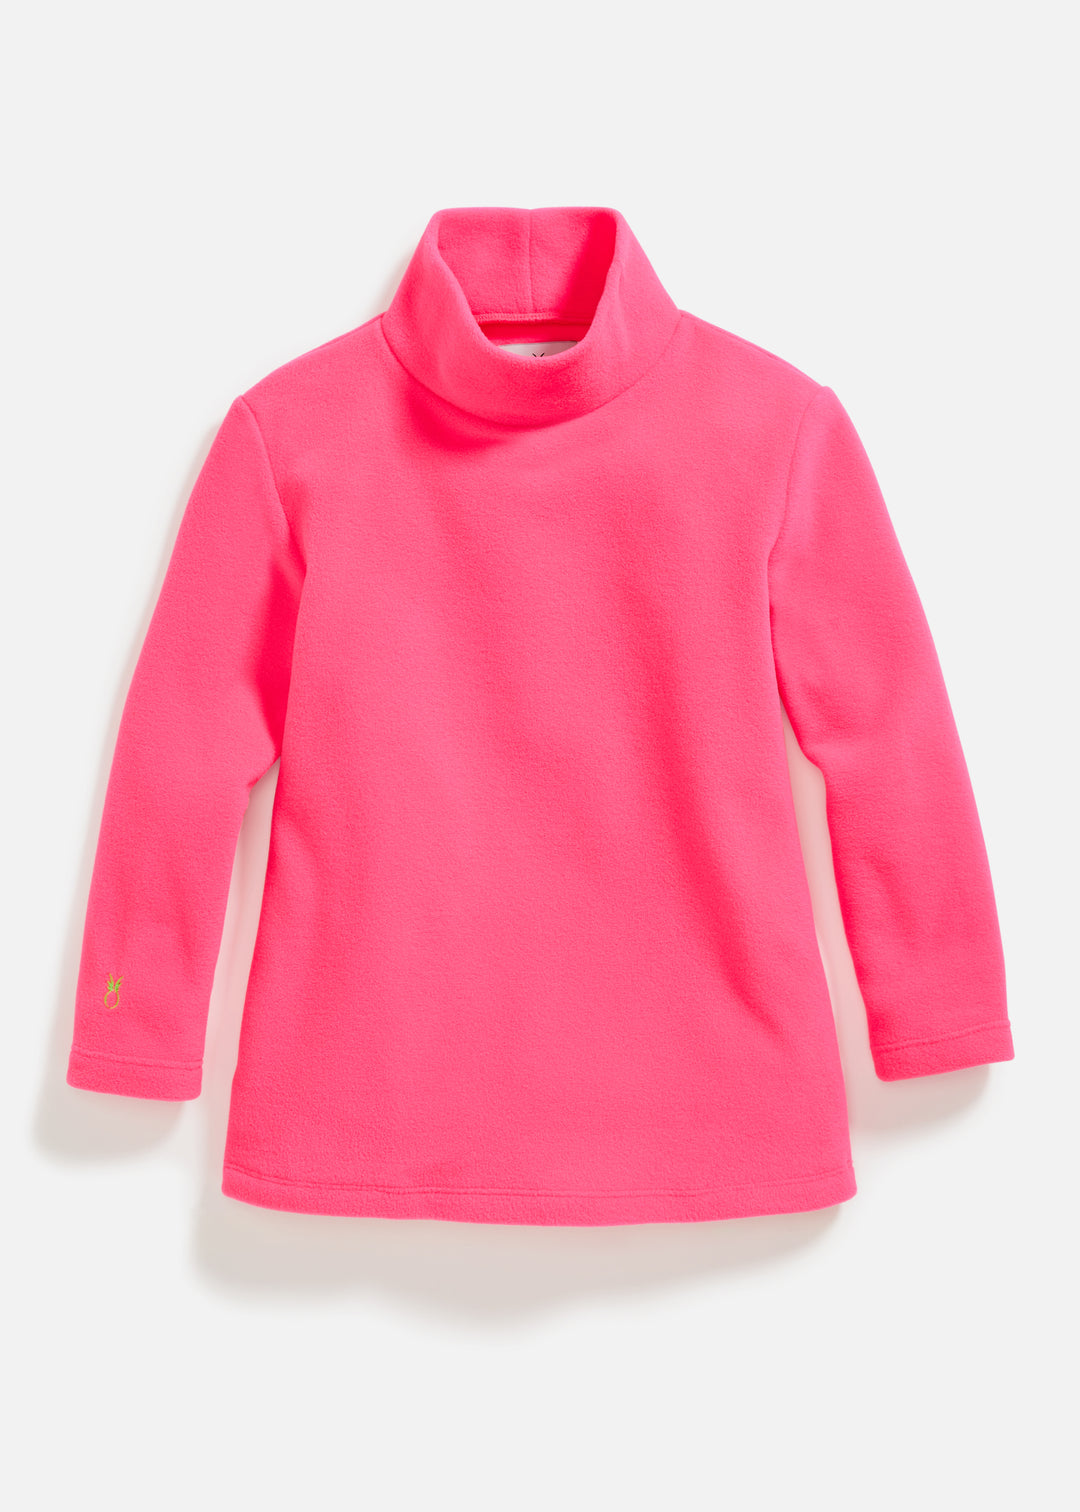 Greenbriar Girls Turtleneck in Vello Fleece (Neon Pink)